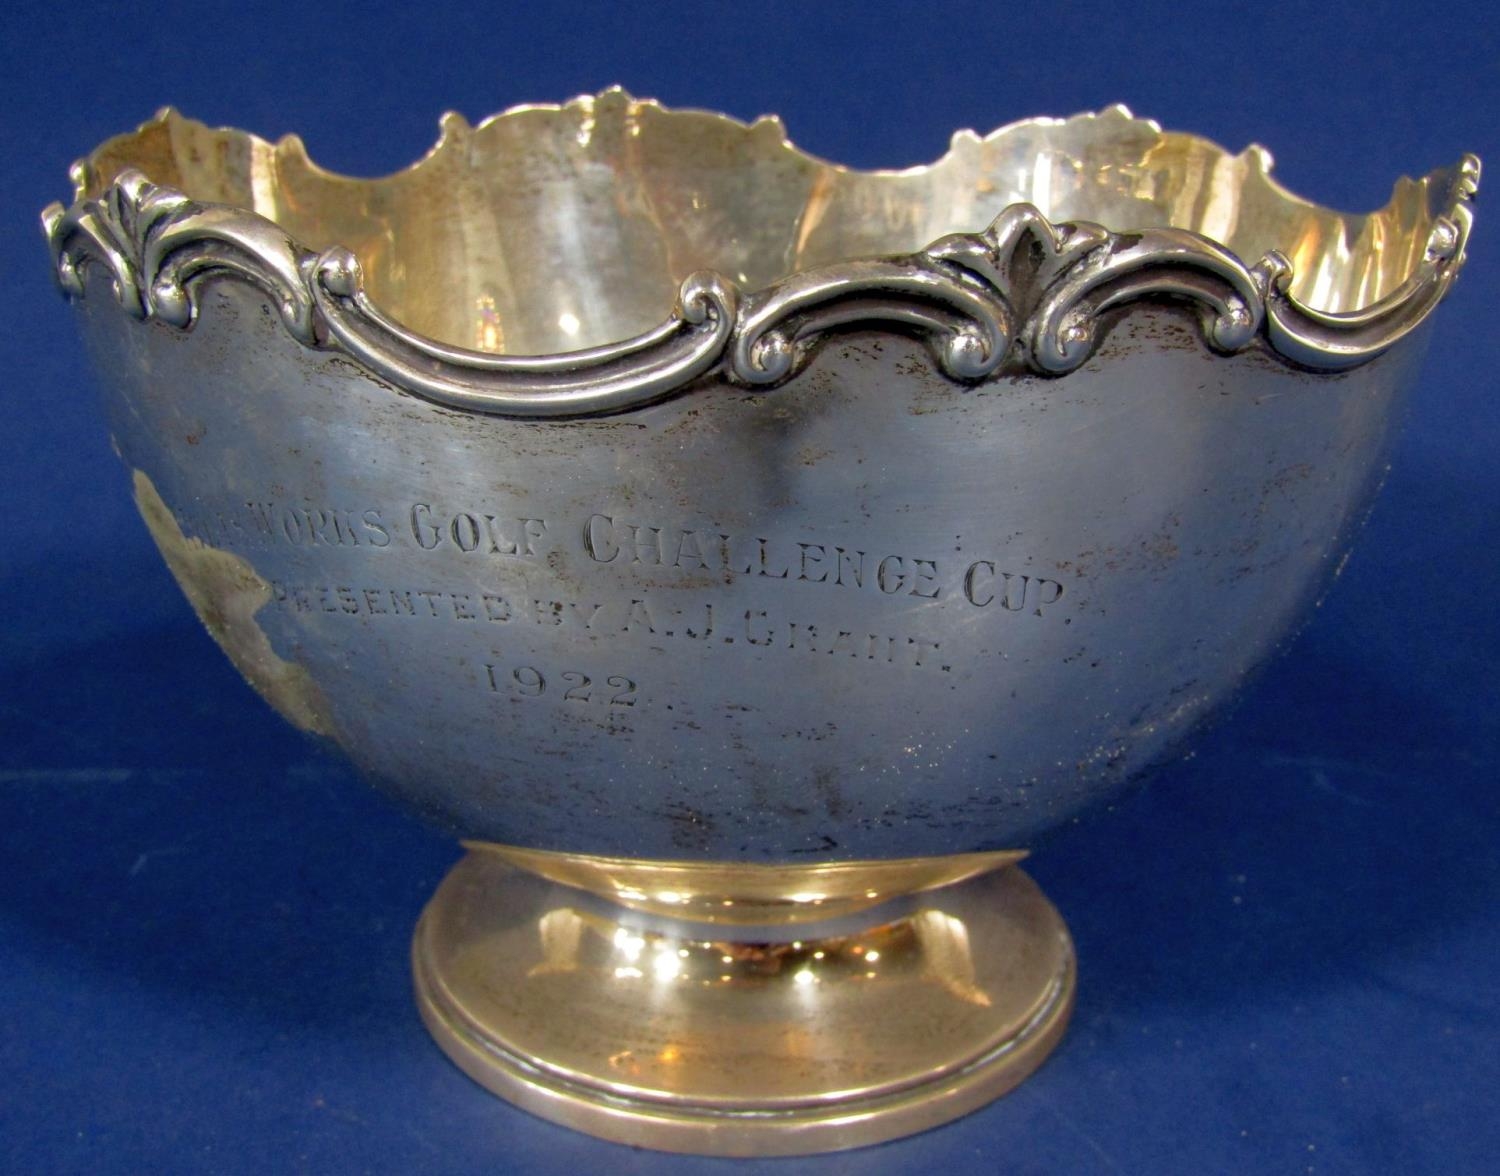 1920s silver presentation pedestal bowl inscribed Atlas Works Golf Challenge Cup, Presented by AJ - Image 3 of 3